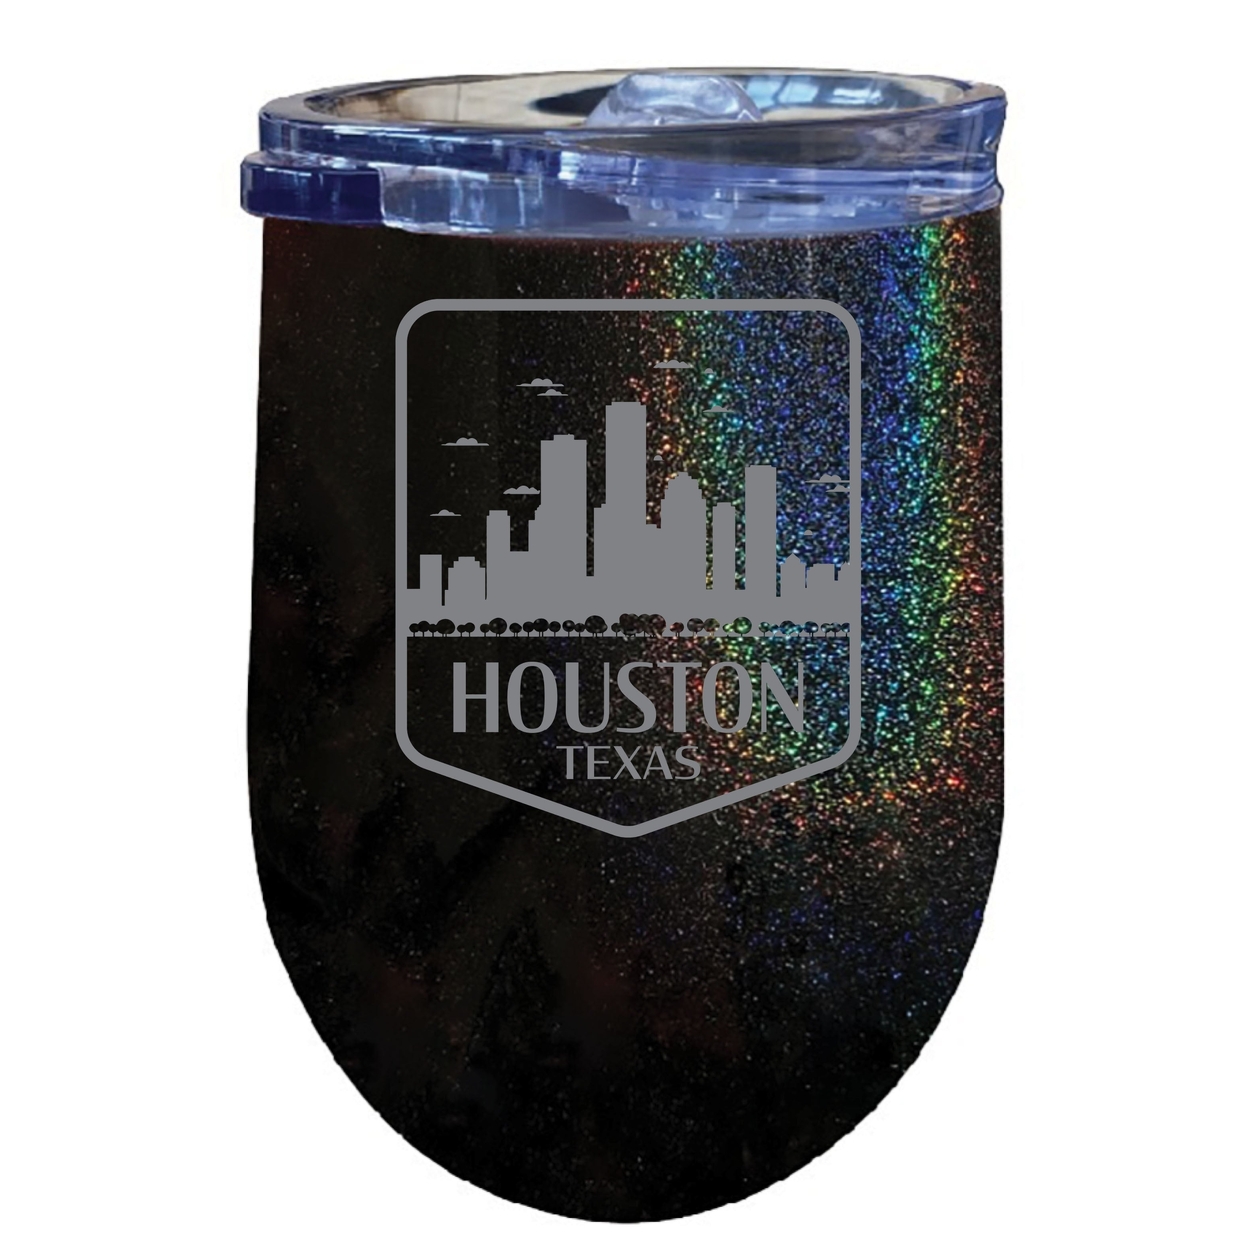 Houston Texas Souvenir 12 Oz Engraved Insulated Wine Stainless Steel Tumbler - Black,,Single Unit